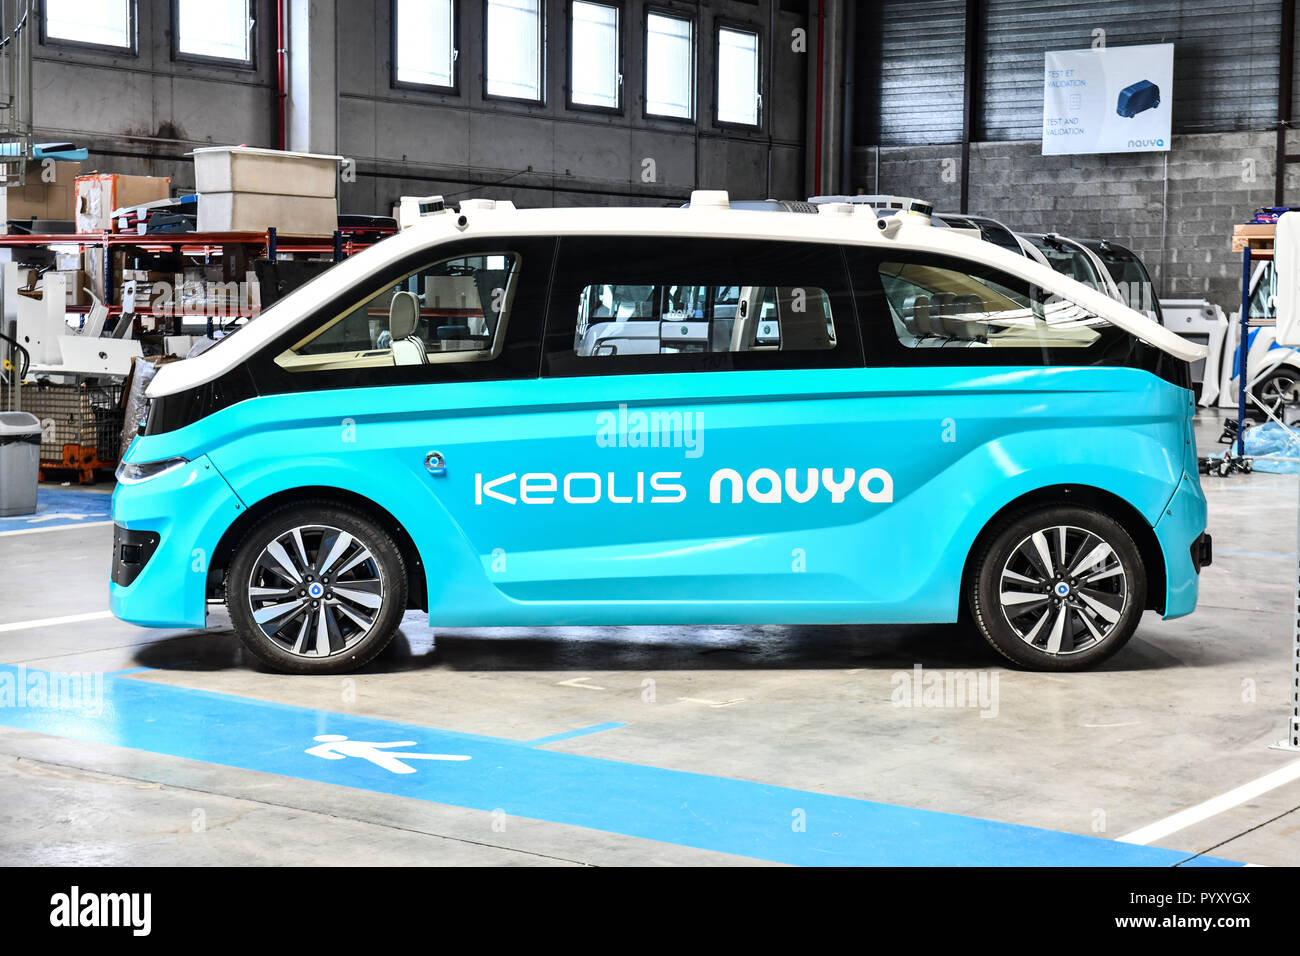 Venissieux (south-eastern France). Navya autonomous vehicle manufacturing plant. Autonom Cab, driverless taxi service developed by Navya and Keolis ** Stock Photo